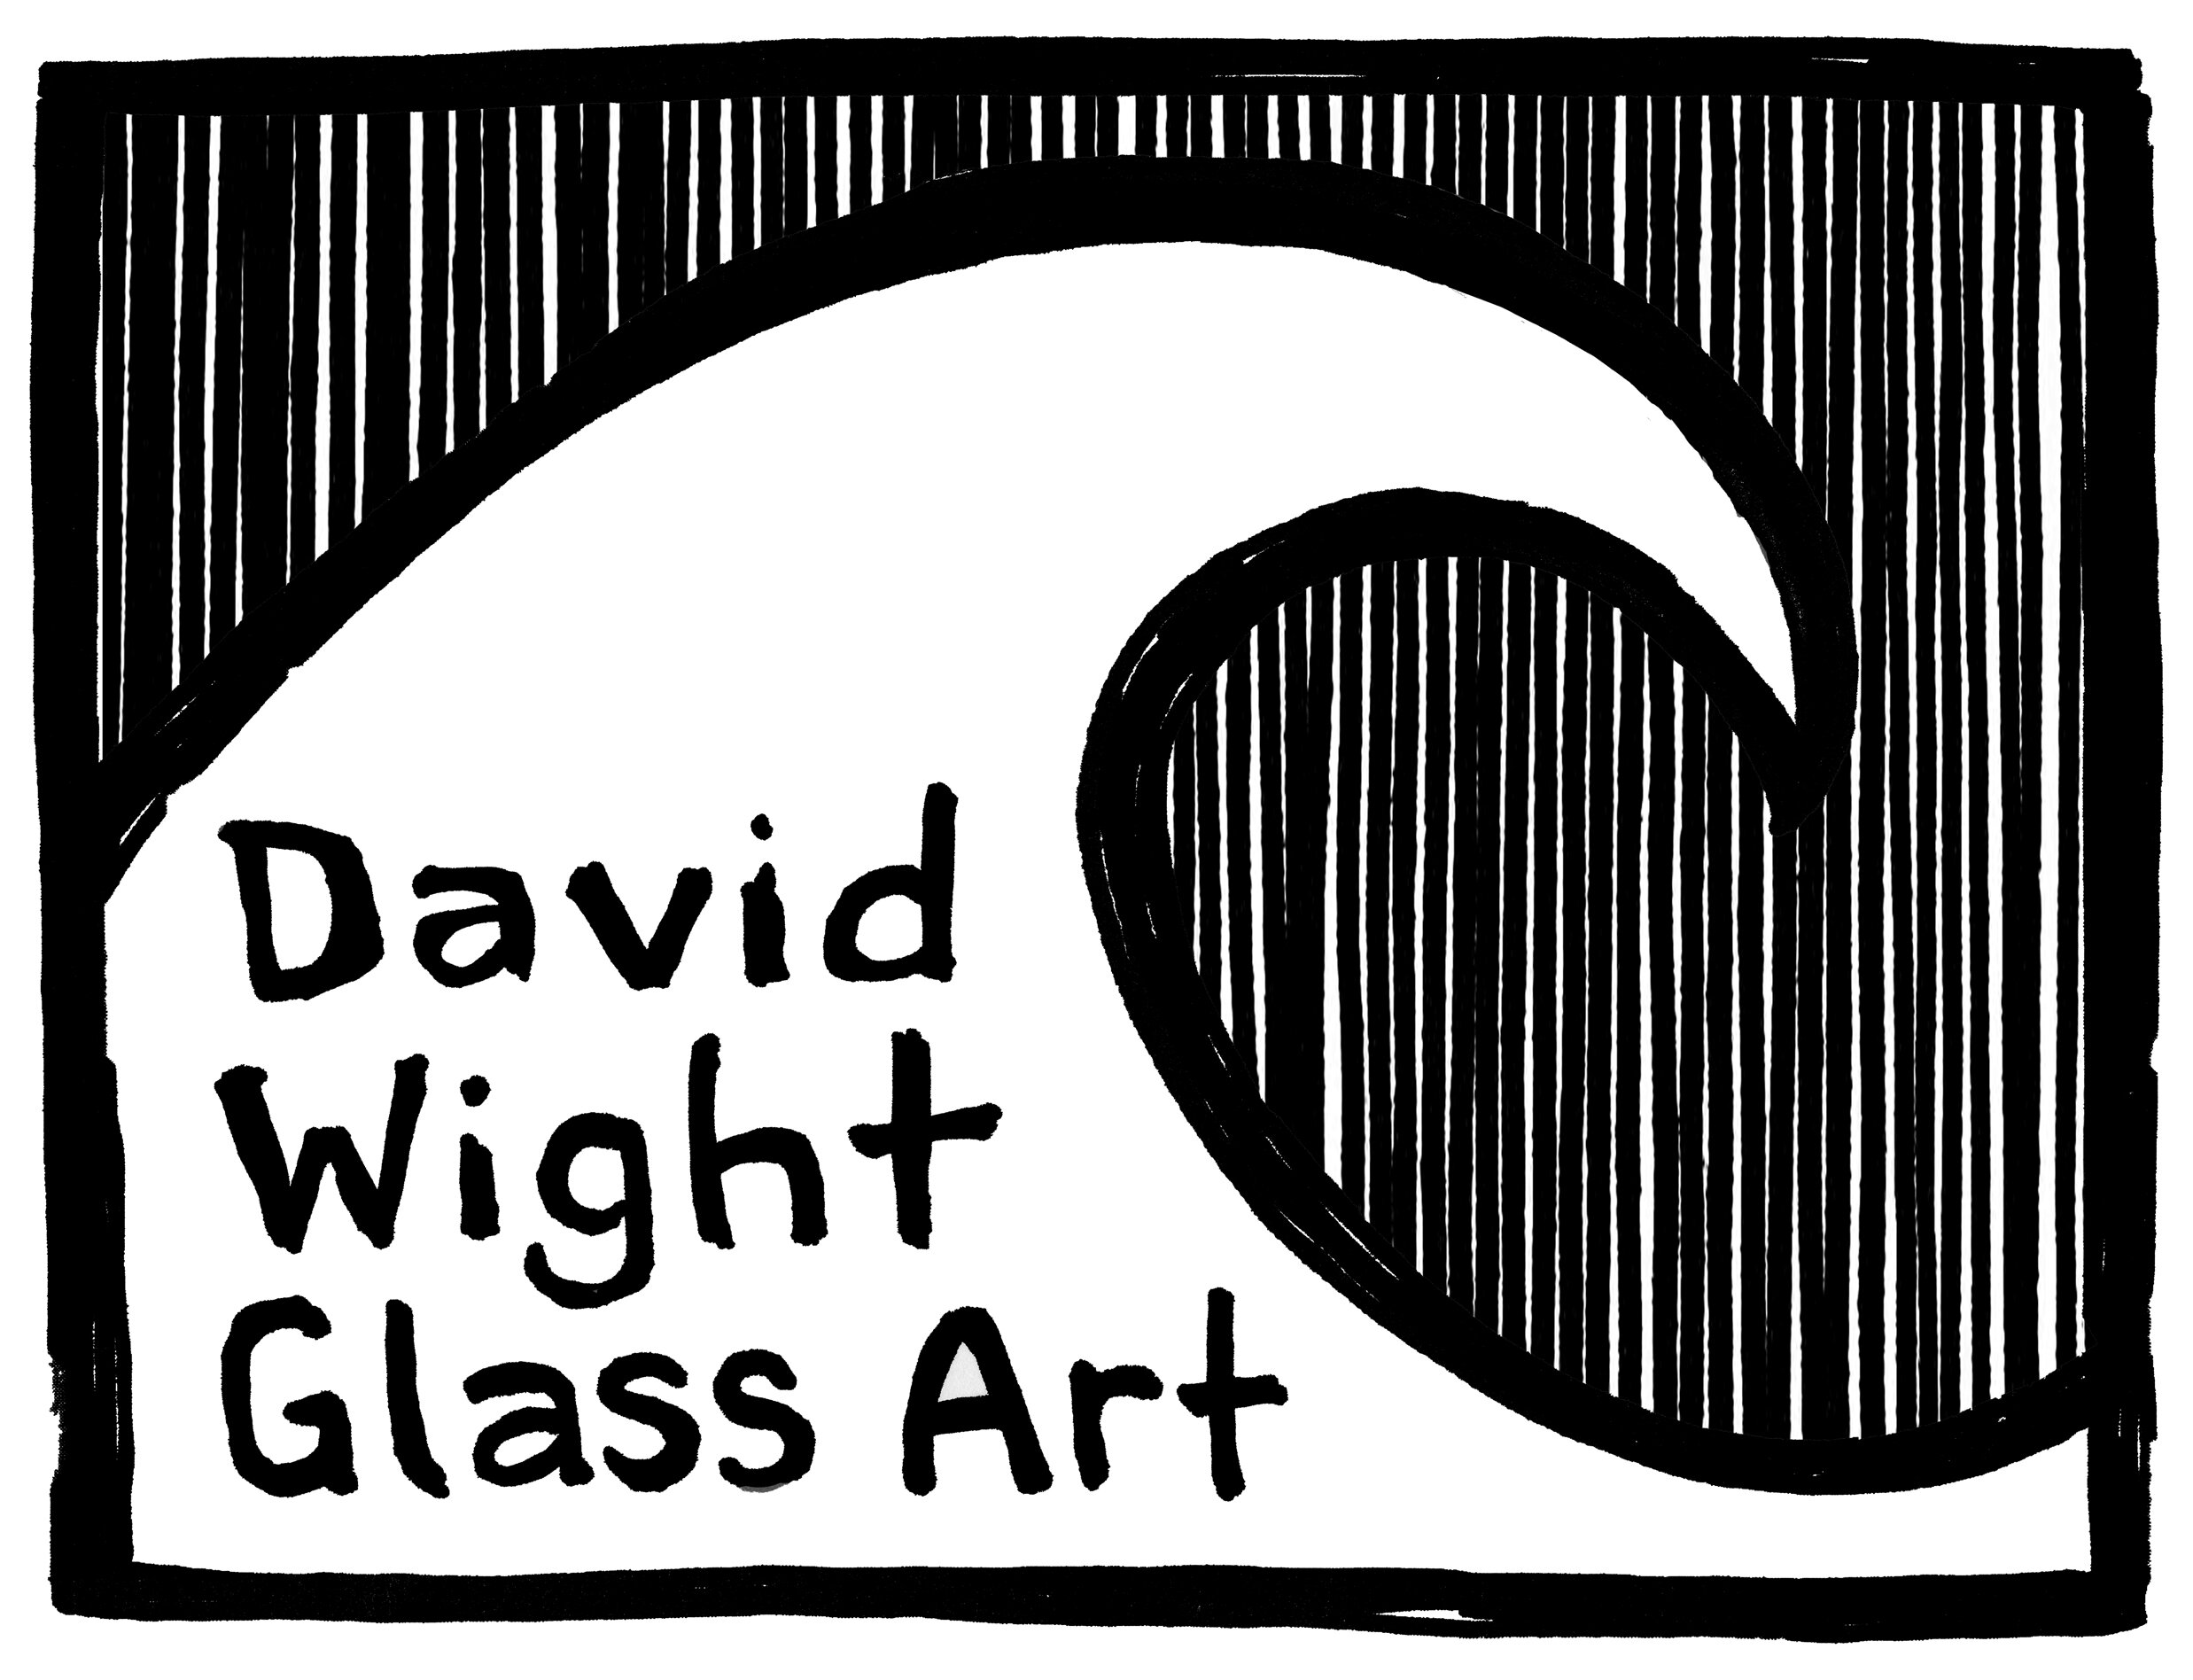 David Wight Glass Art